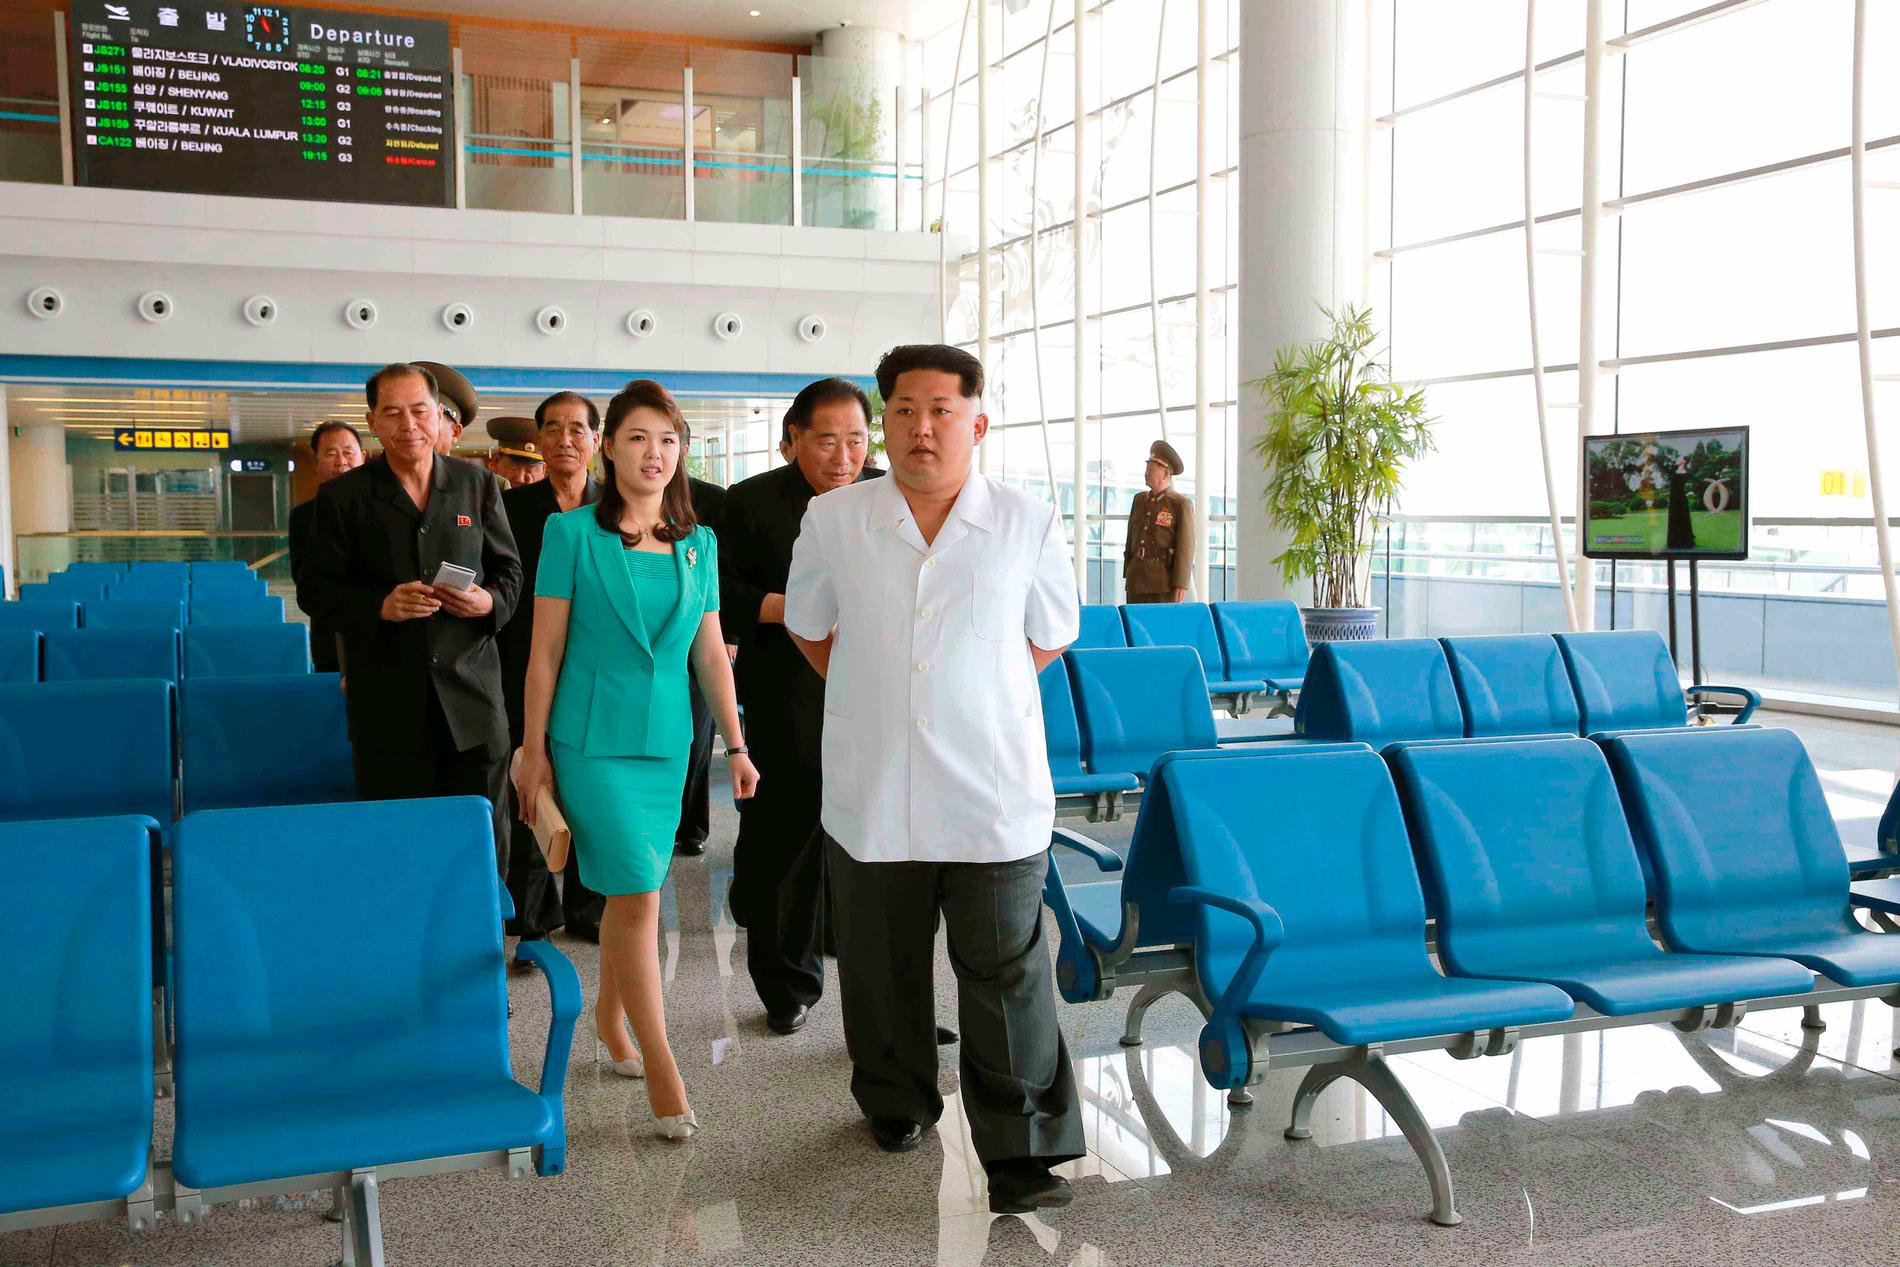 Nordkoreas diktator Kim Jong-Un kollar in sitt nya skrytbygge.